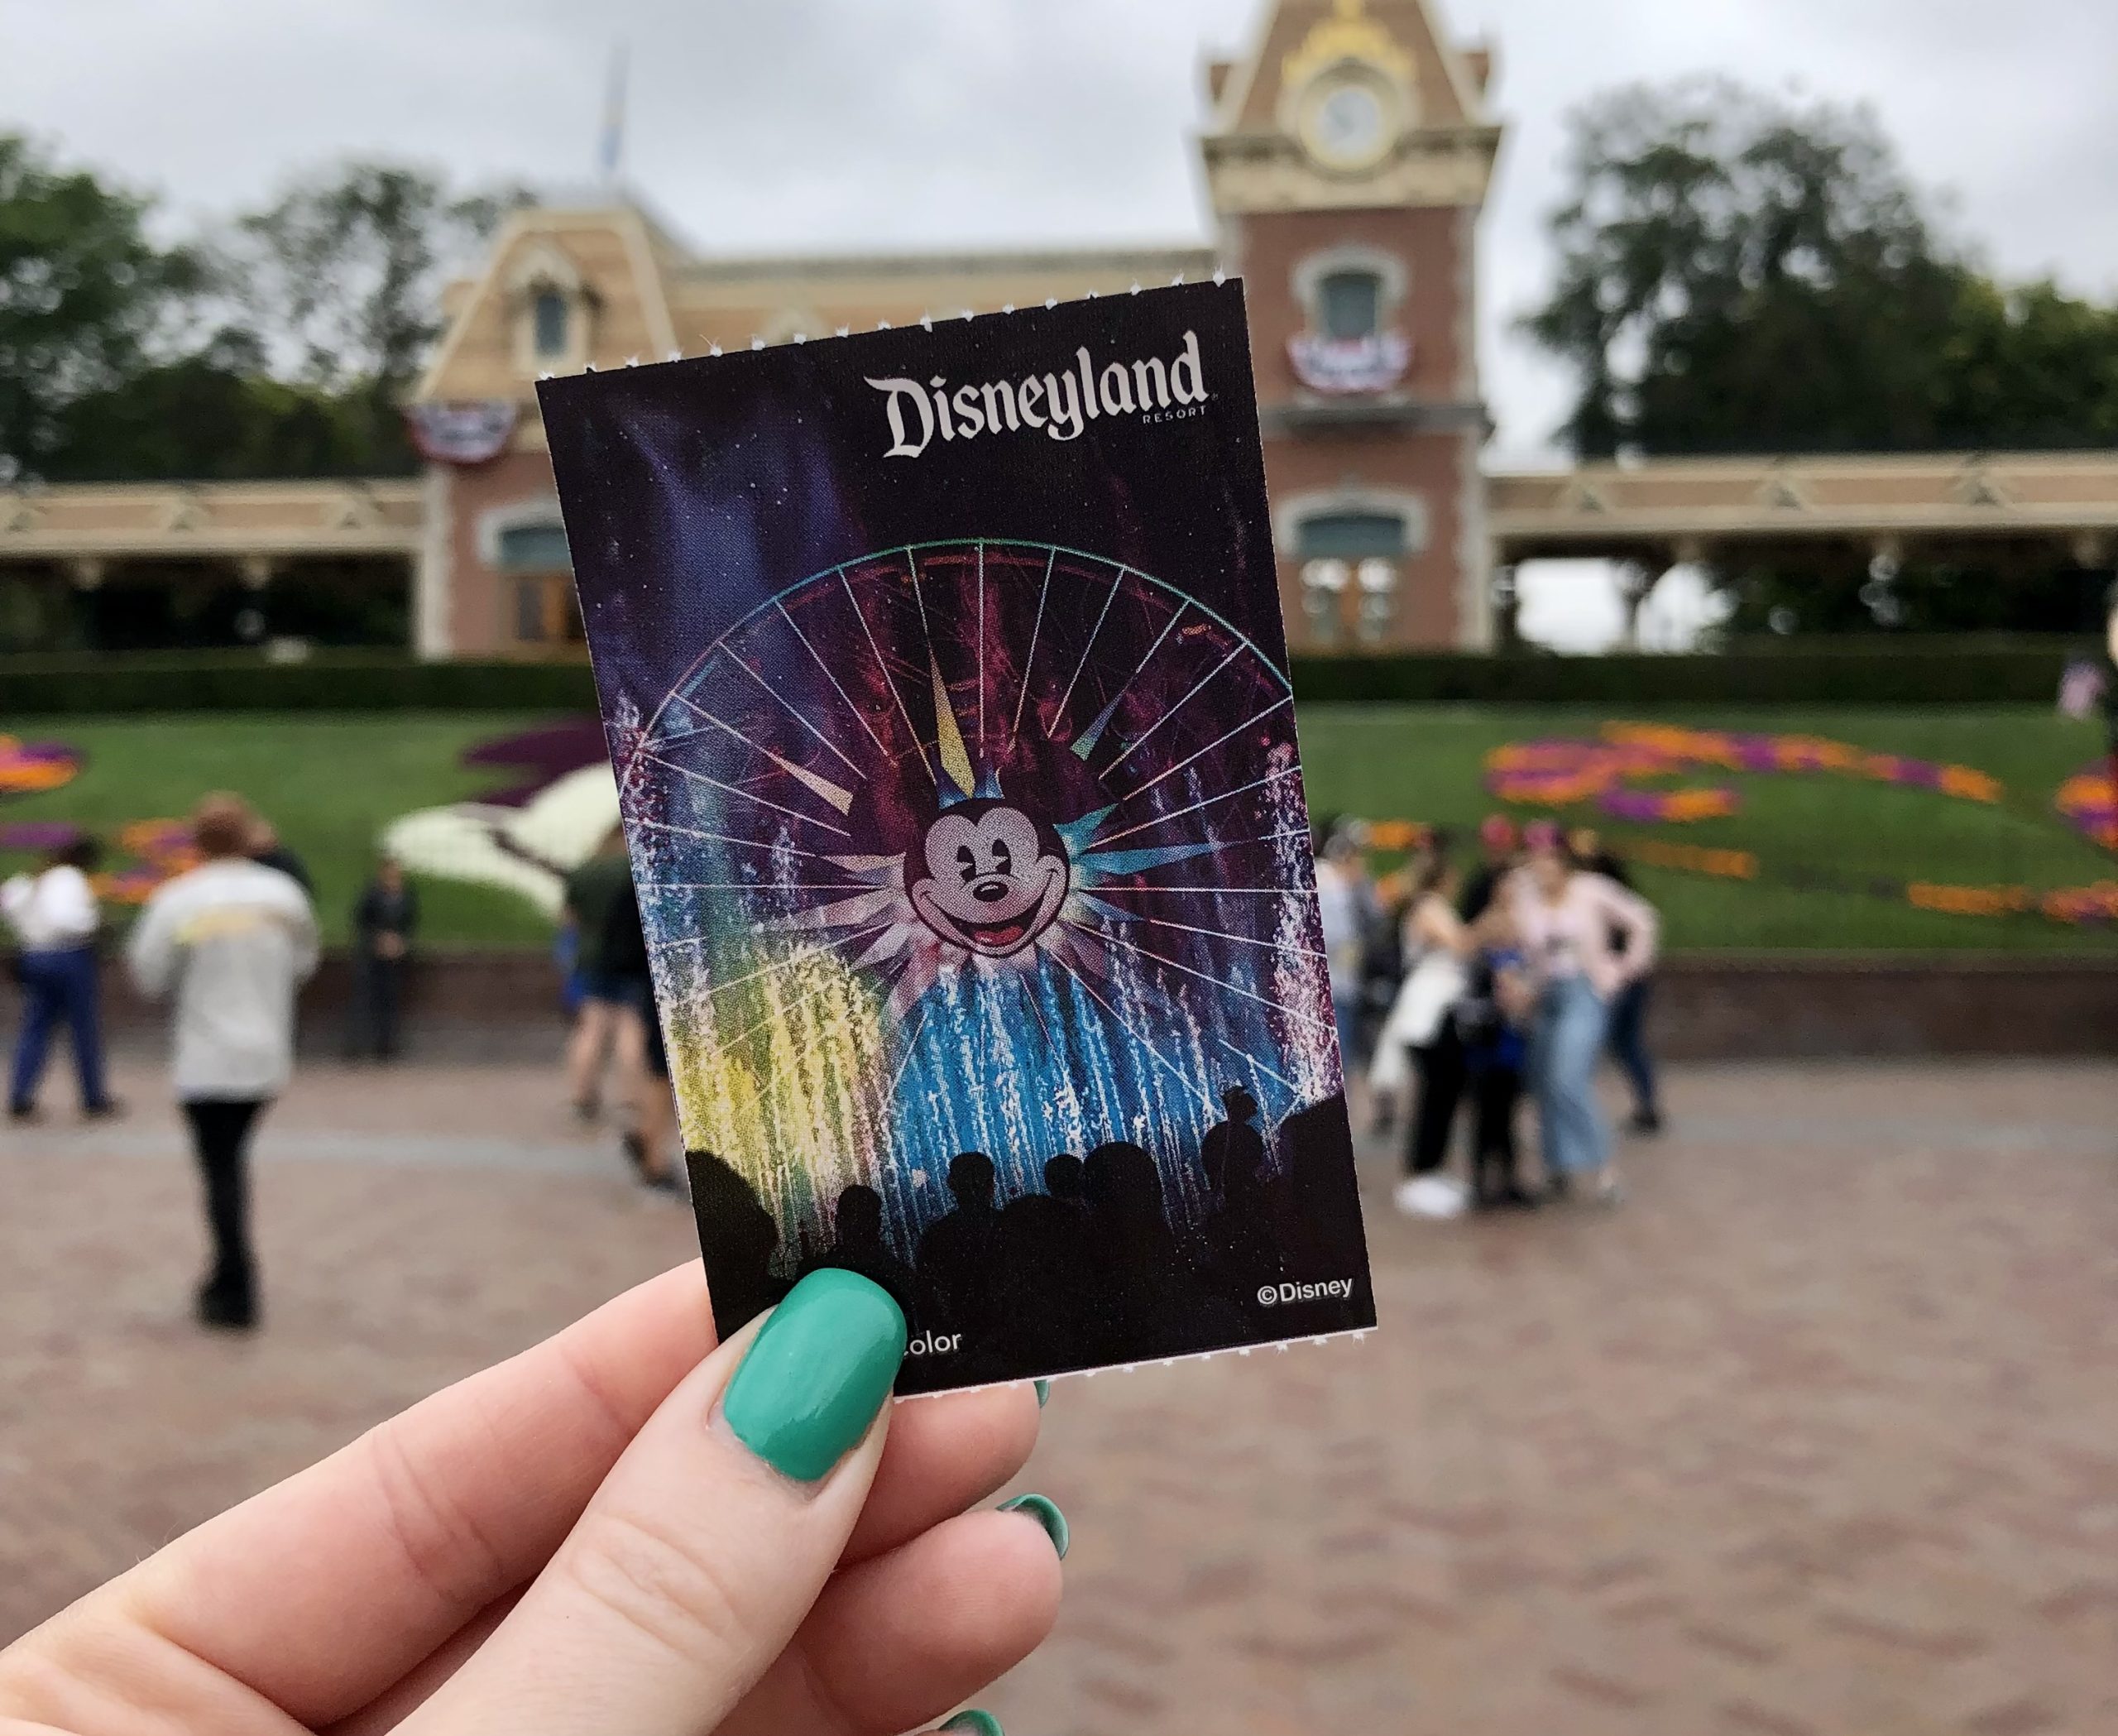 Disneyland Updates Ticket Sales and Reservation Process - Food at Disneyland